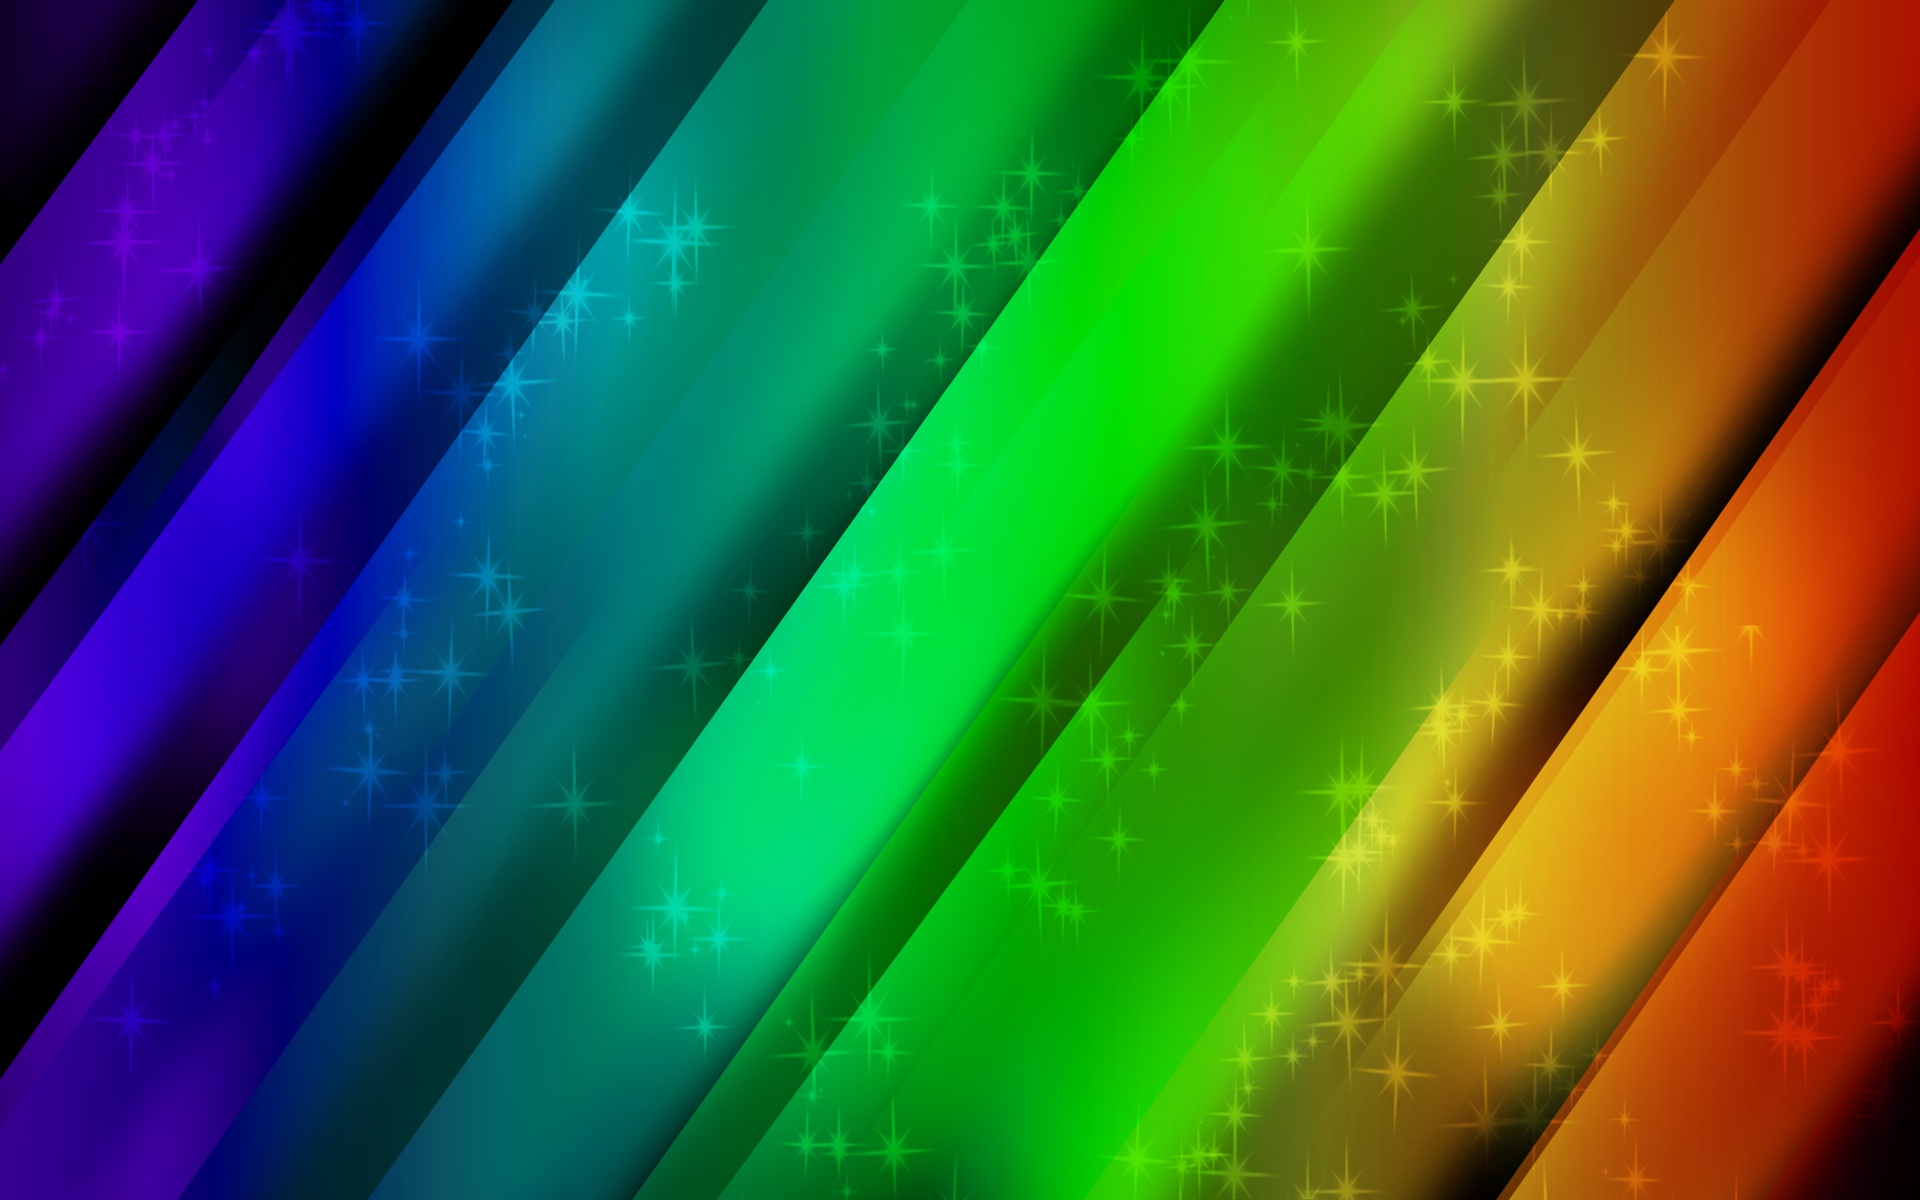 35 Free Colorful Desktop Backgrounds